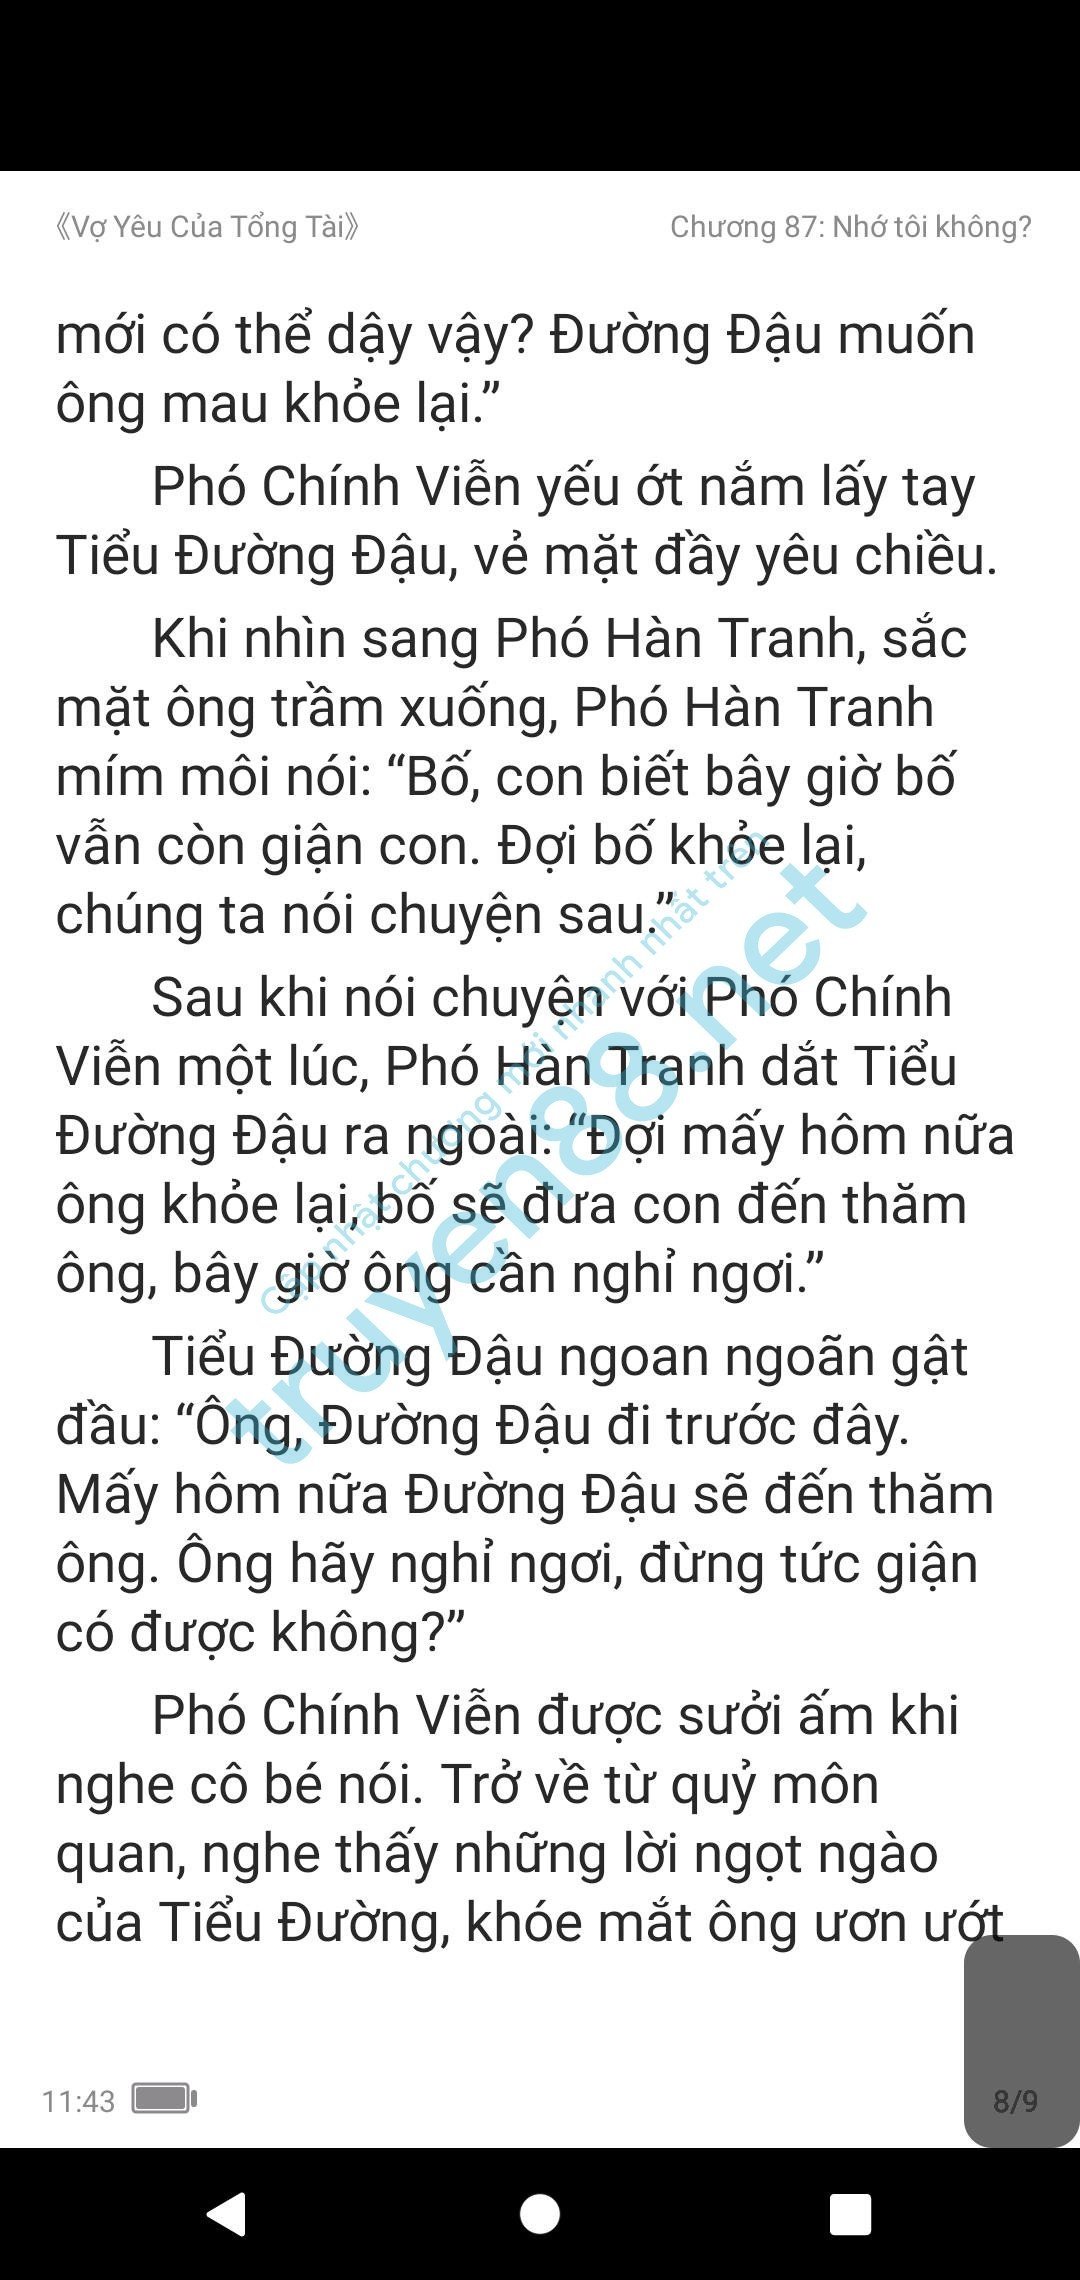 vo-yeu-cua-tong-tai-mo-vi-lan--pho-han-tranh-87-1